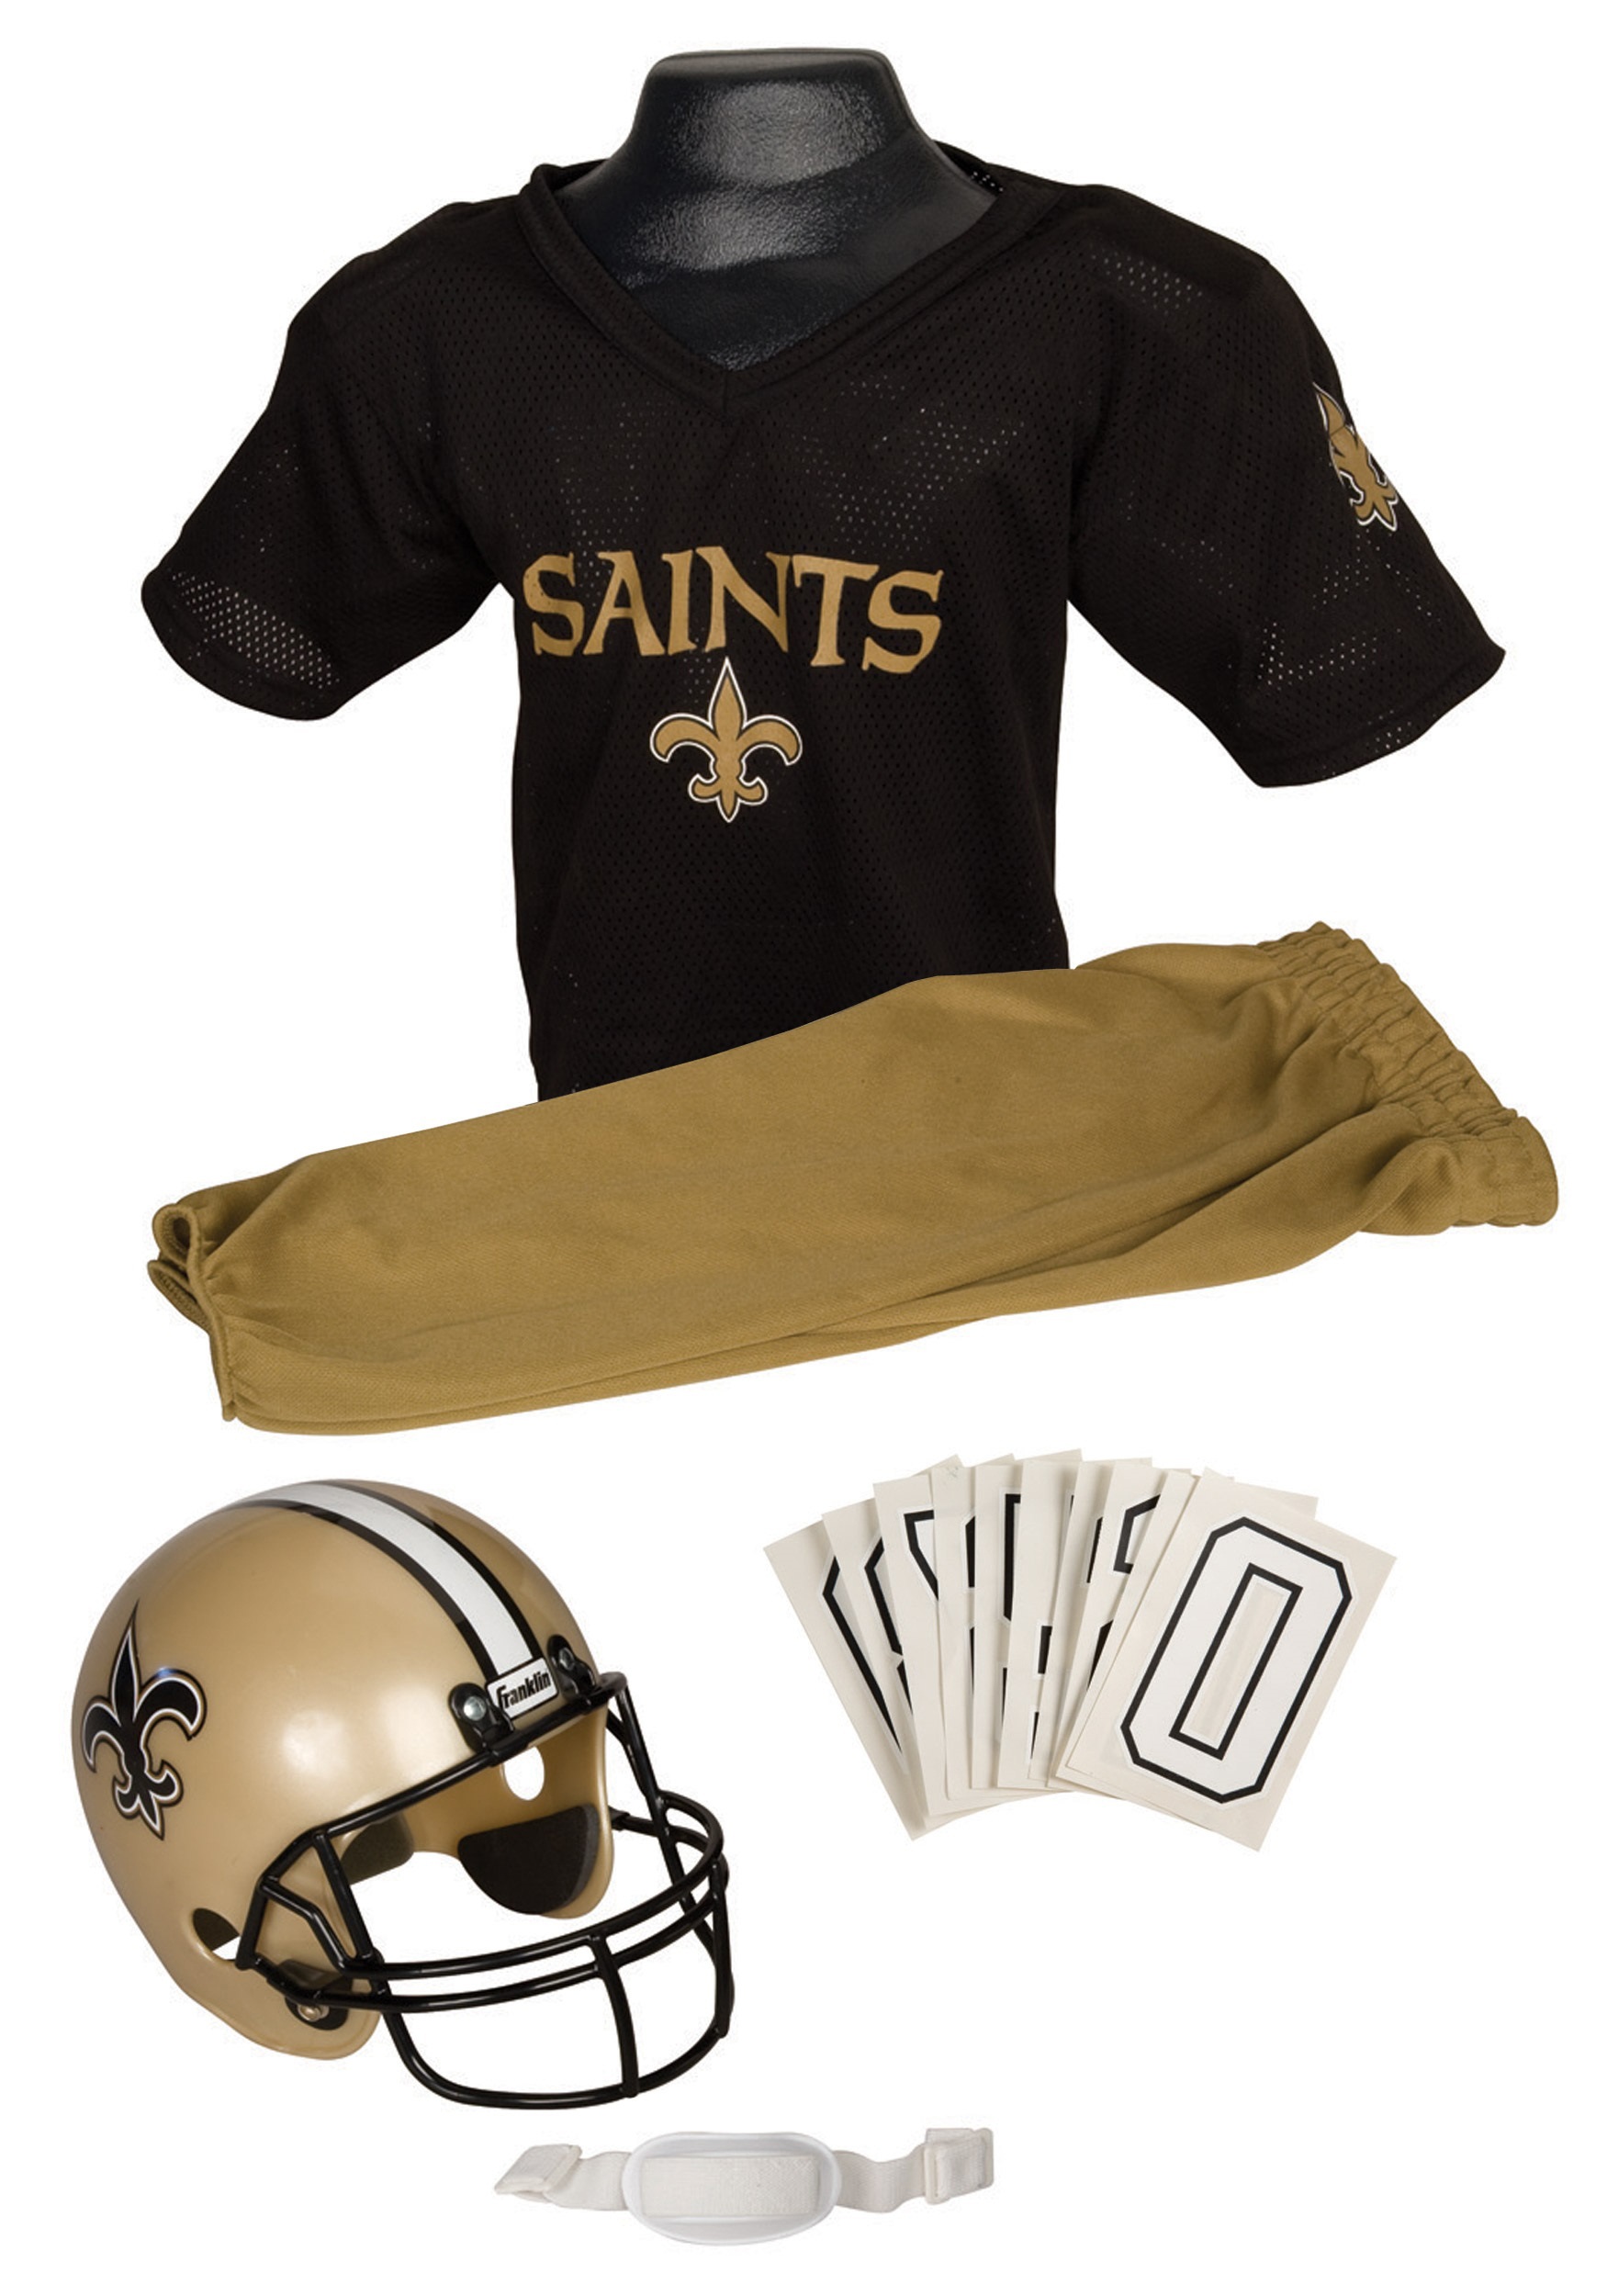 Kids NFL Saints Uniform Costume